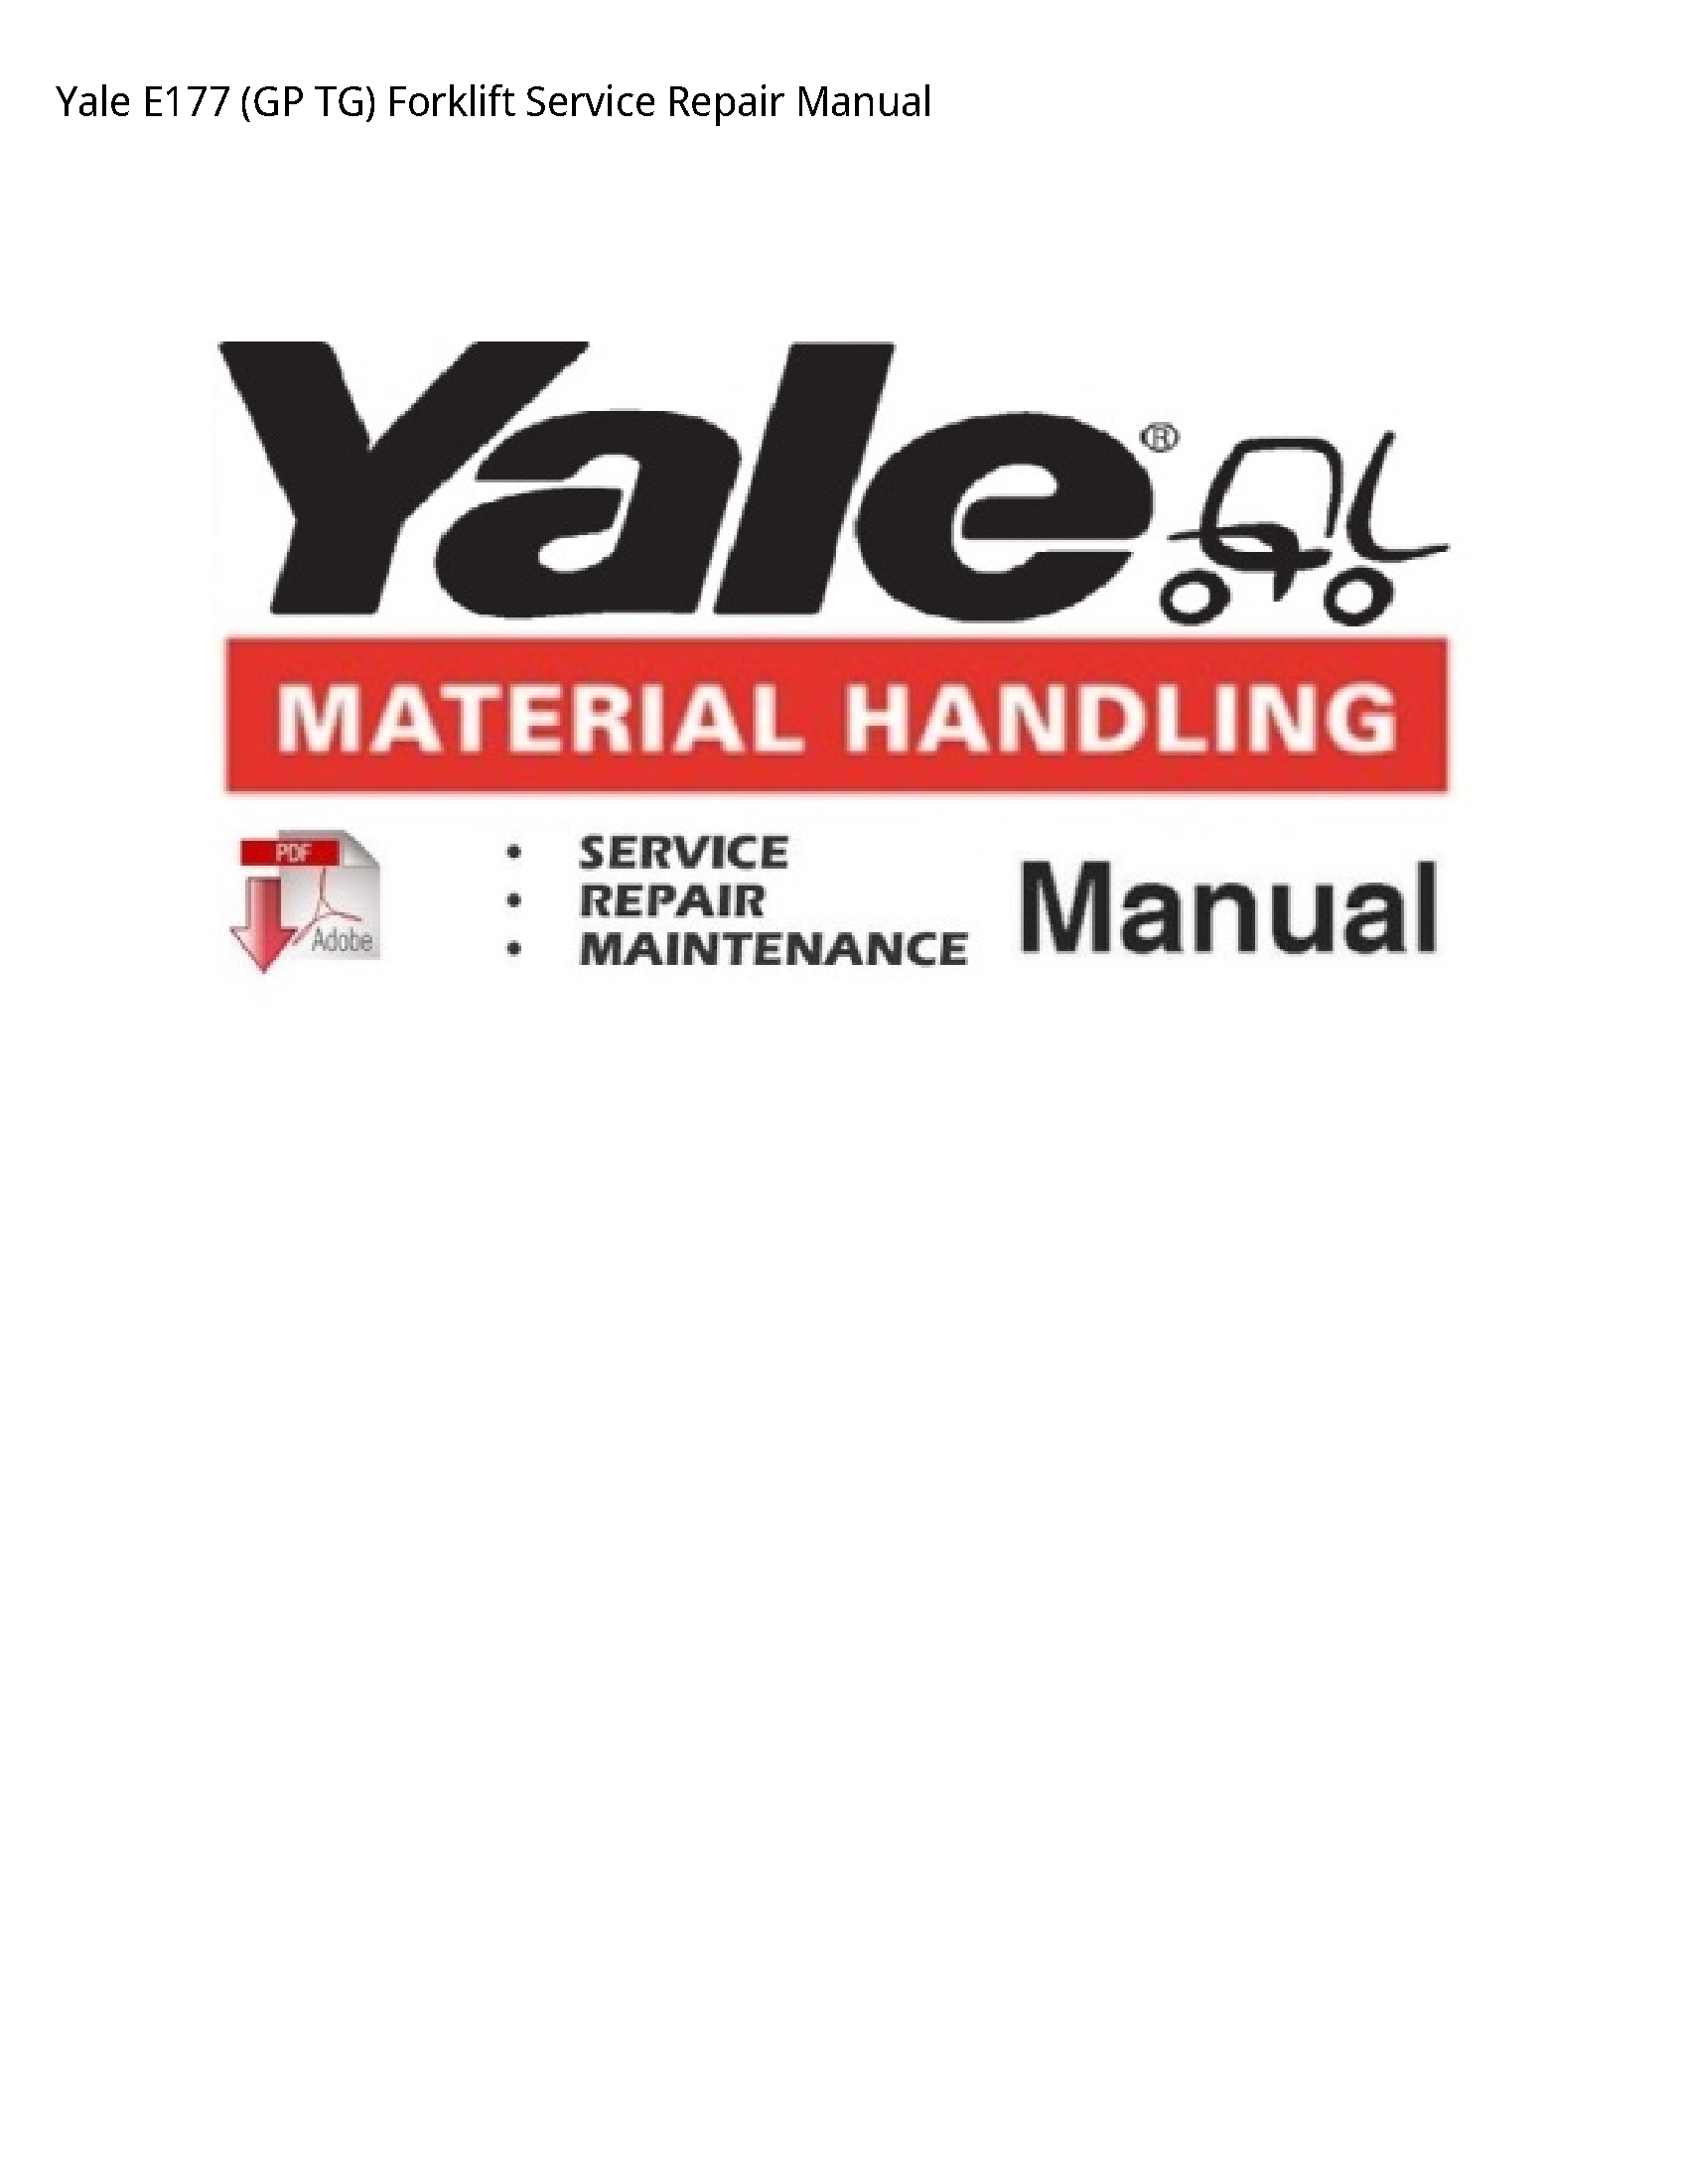 Yale E177 (GP TG) Forklift manual